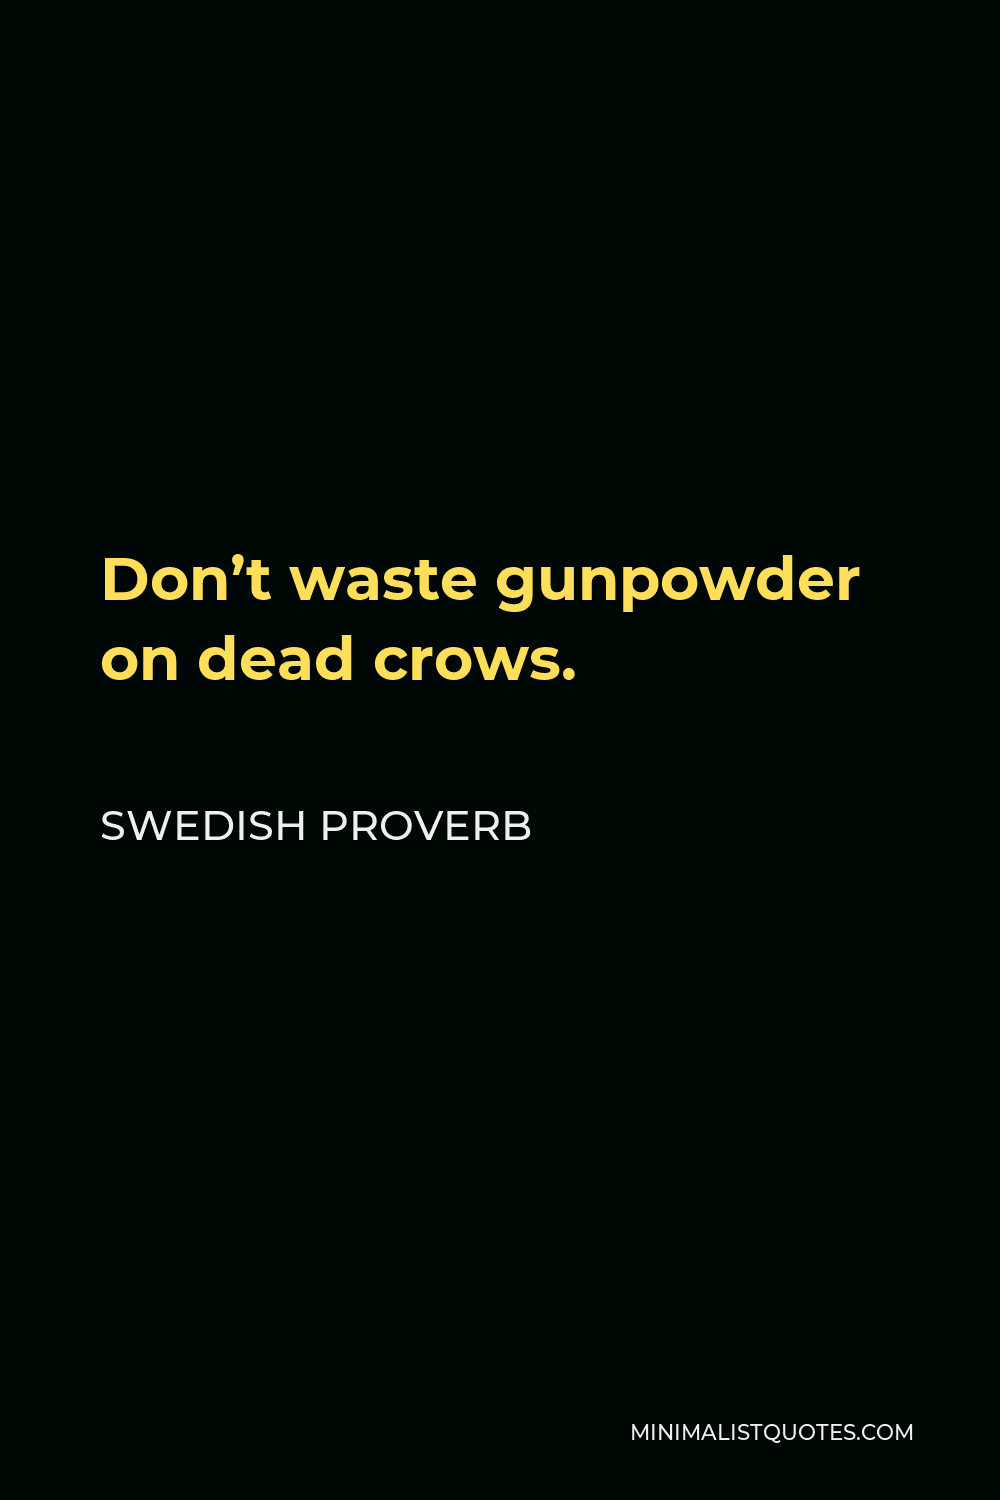 Swedish Proverb Quote - Don’t waste gunpowder on dead crows.